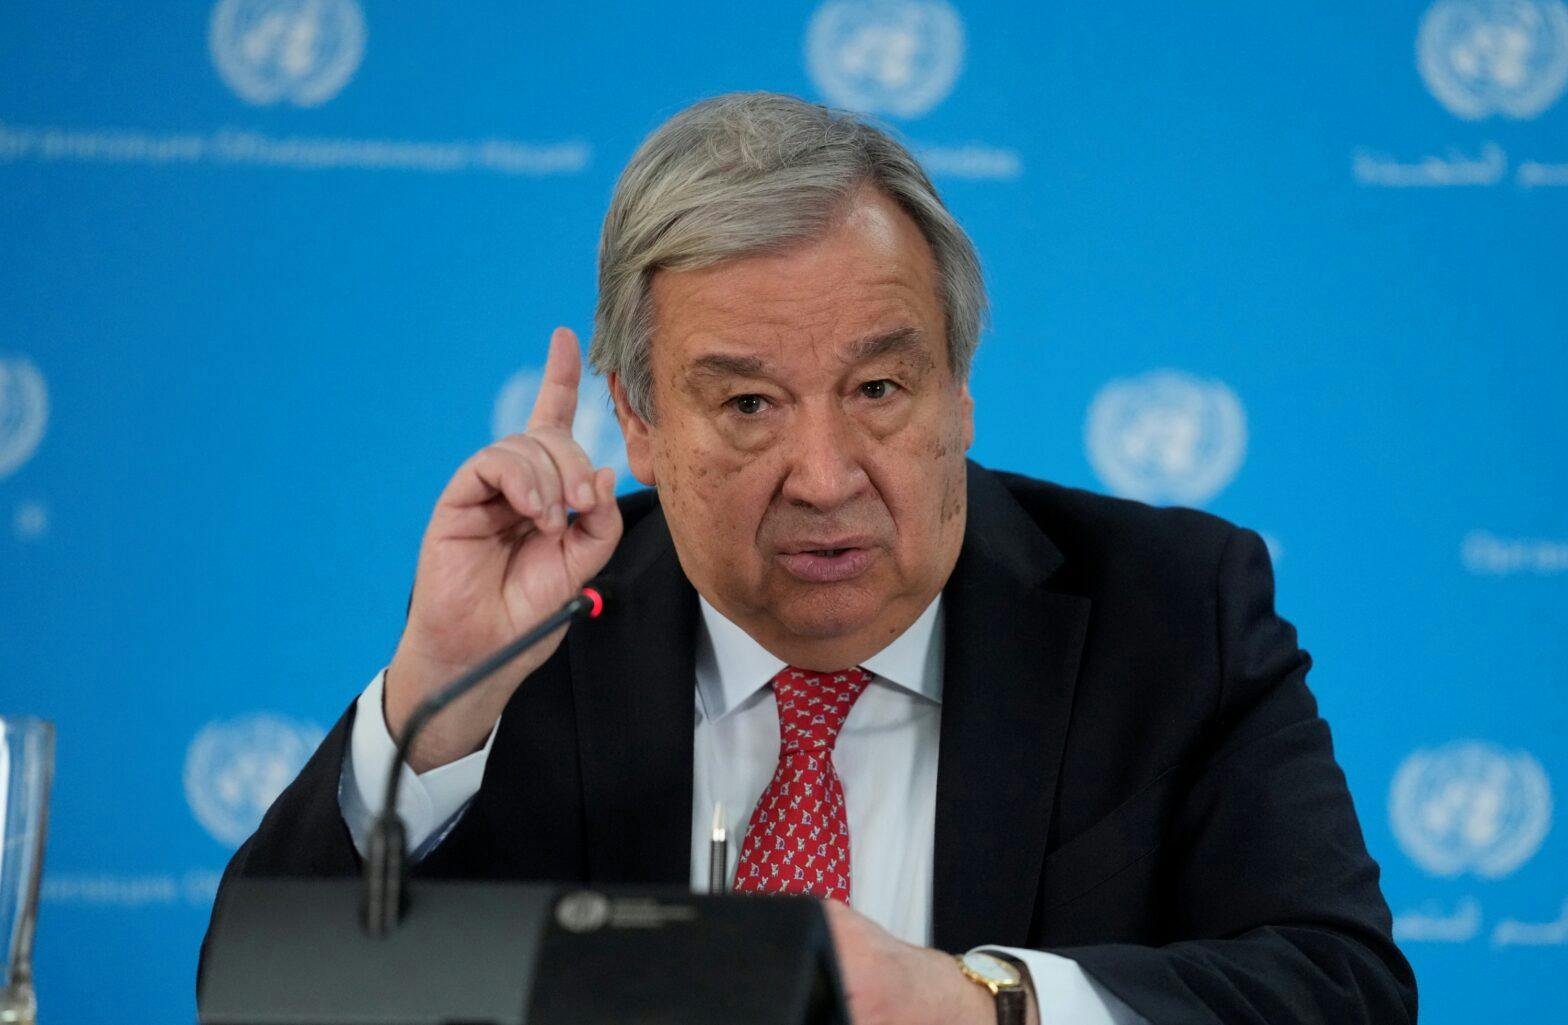 Antonio Guterres hever pekefinger under pressekonferanse